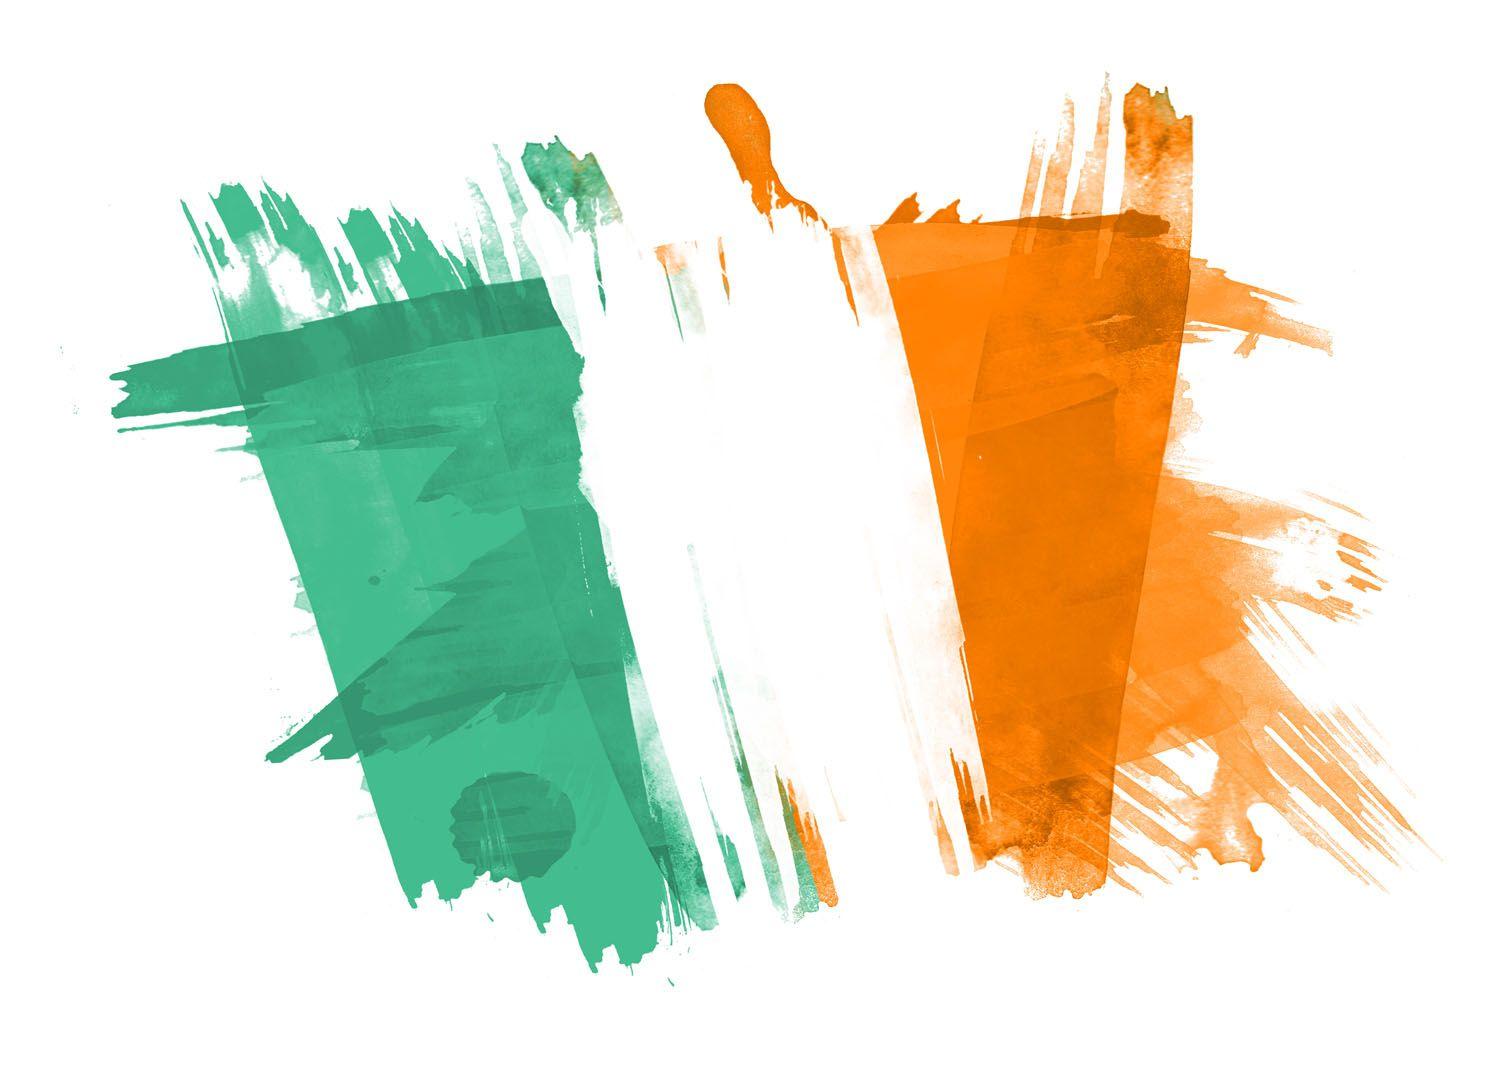 Gallery For > Irish Flag Wallpaper